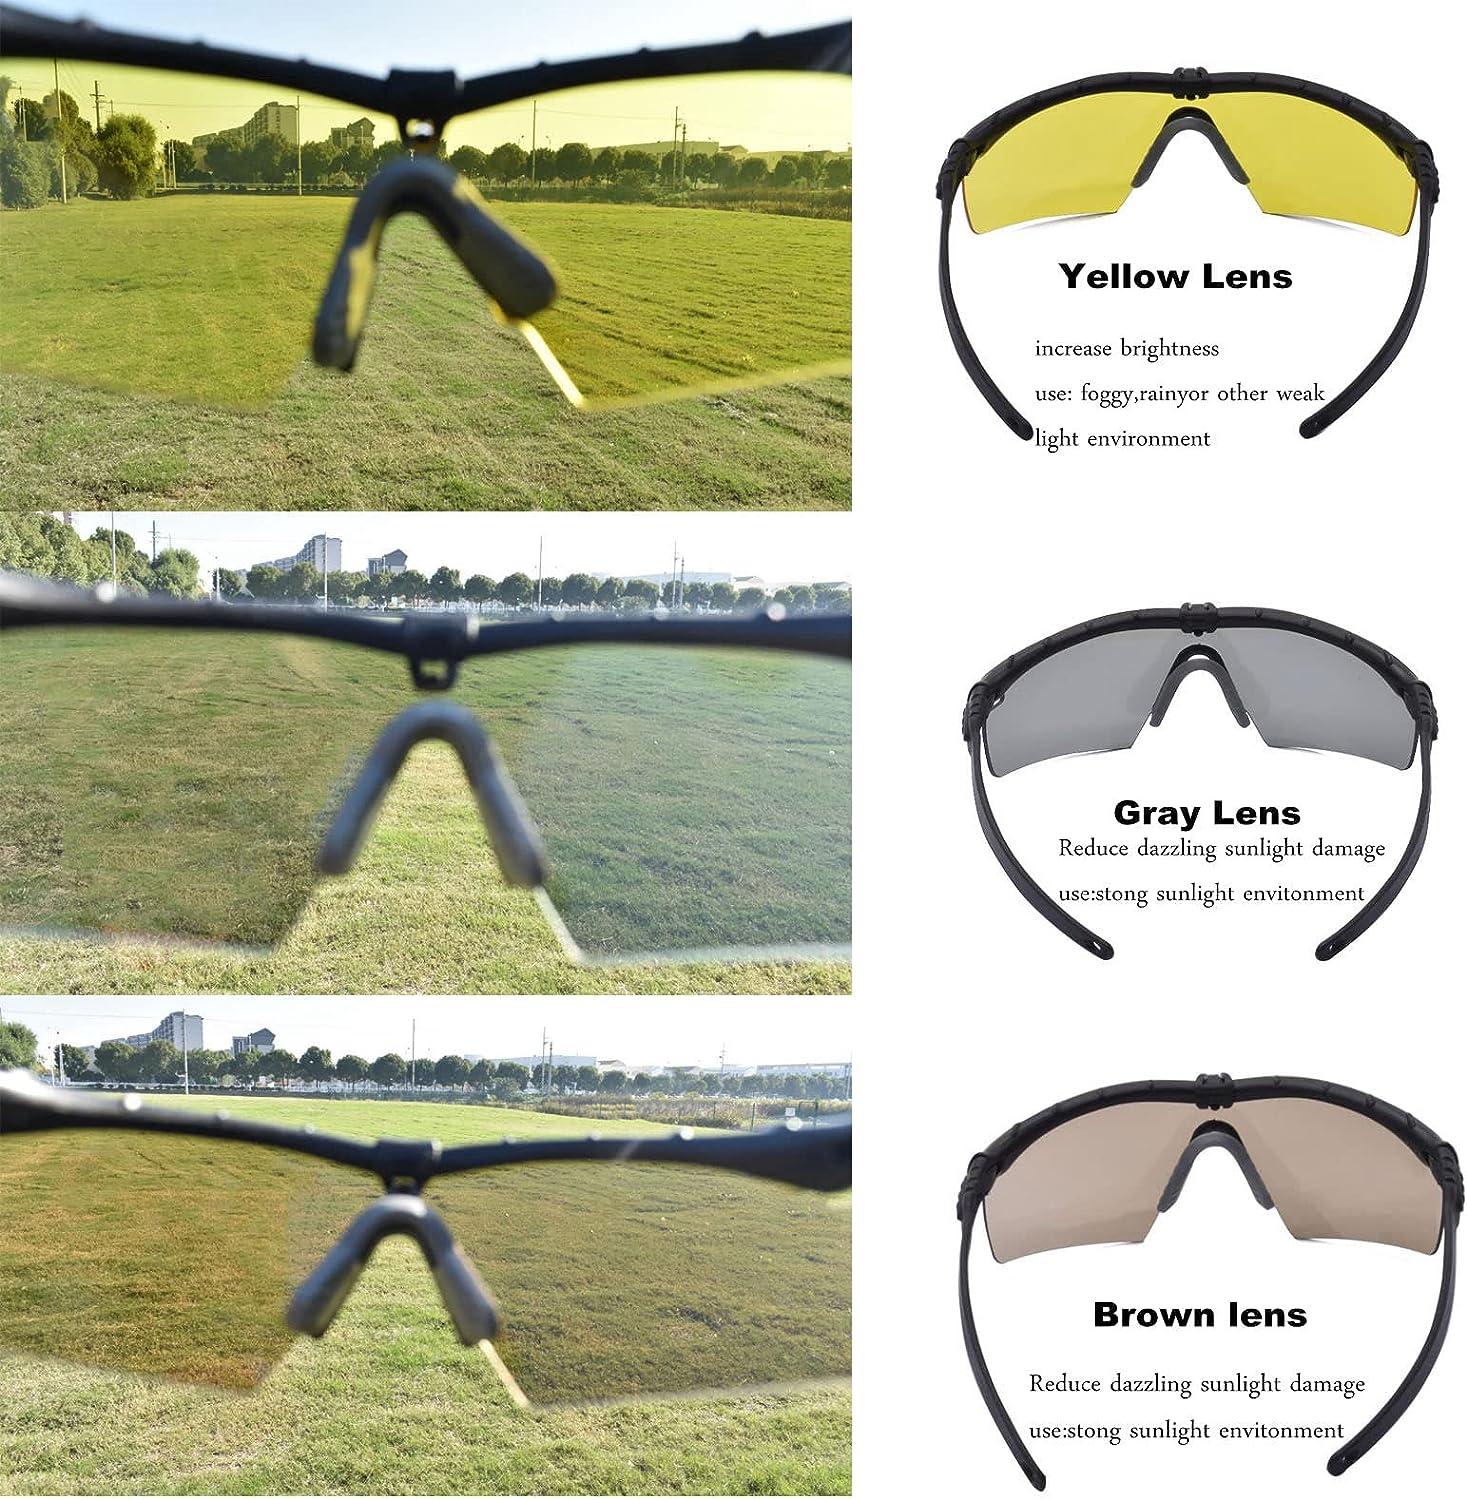 Hdlsina Tactical Eyewear Anti Fog Shooting Safety Glasses for Men Unisex  Military Grade Safety Sunglasses Set of 3 Khaki